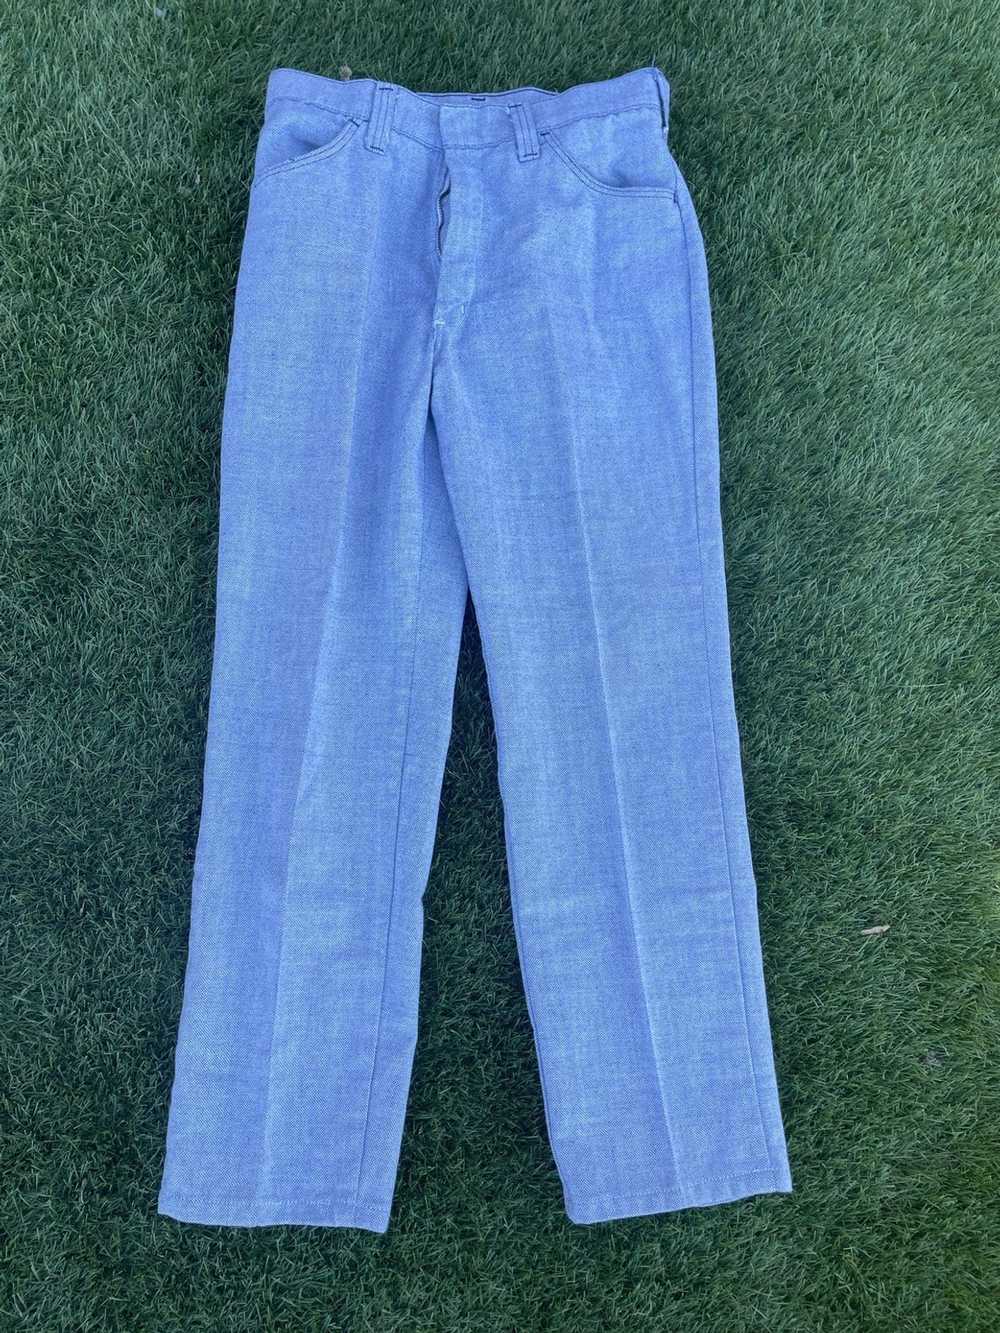 Wrangler Vintage Wrangler Straight Cut Pants - image 1